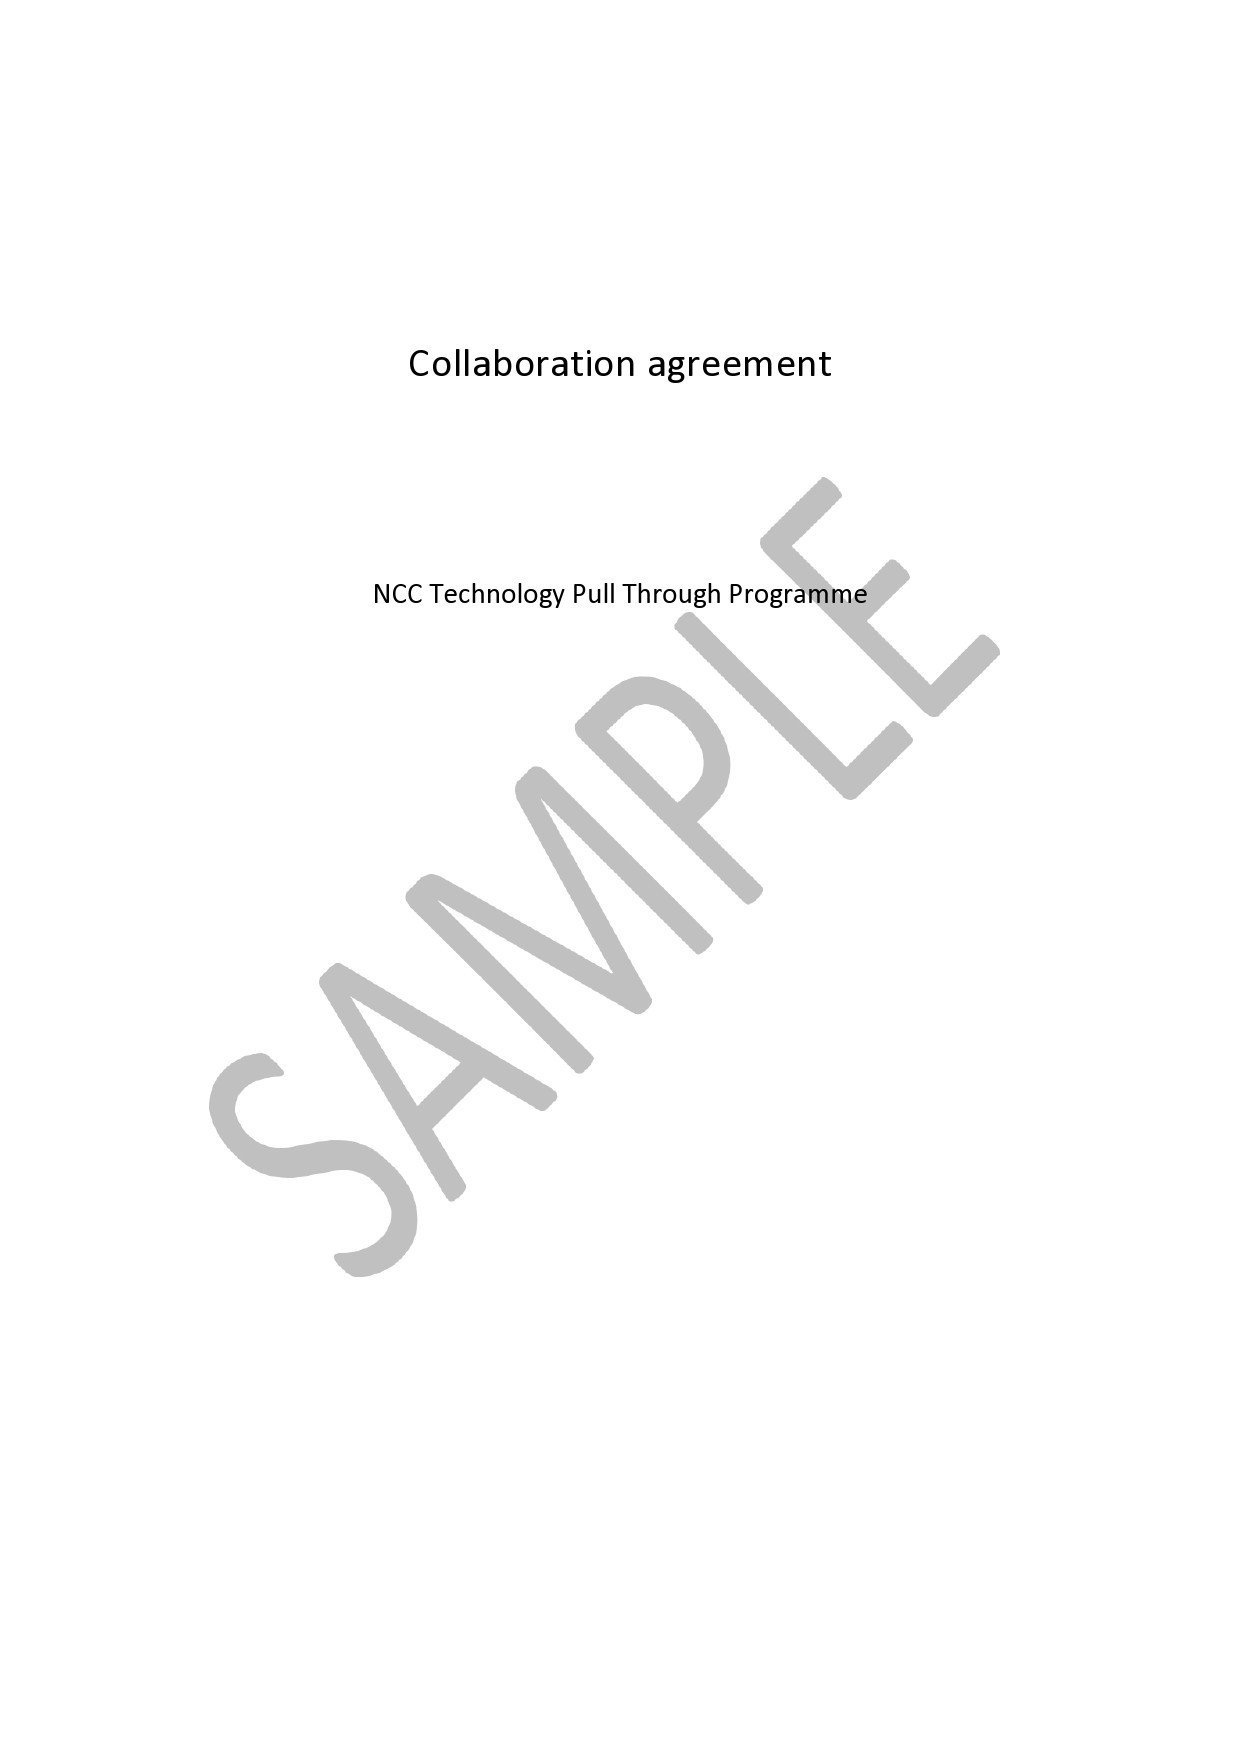 Free collaboration agreement 22